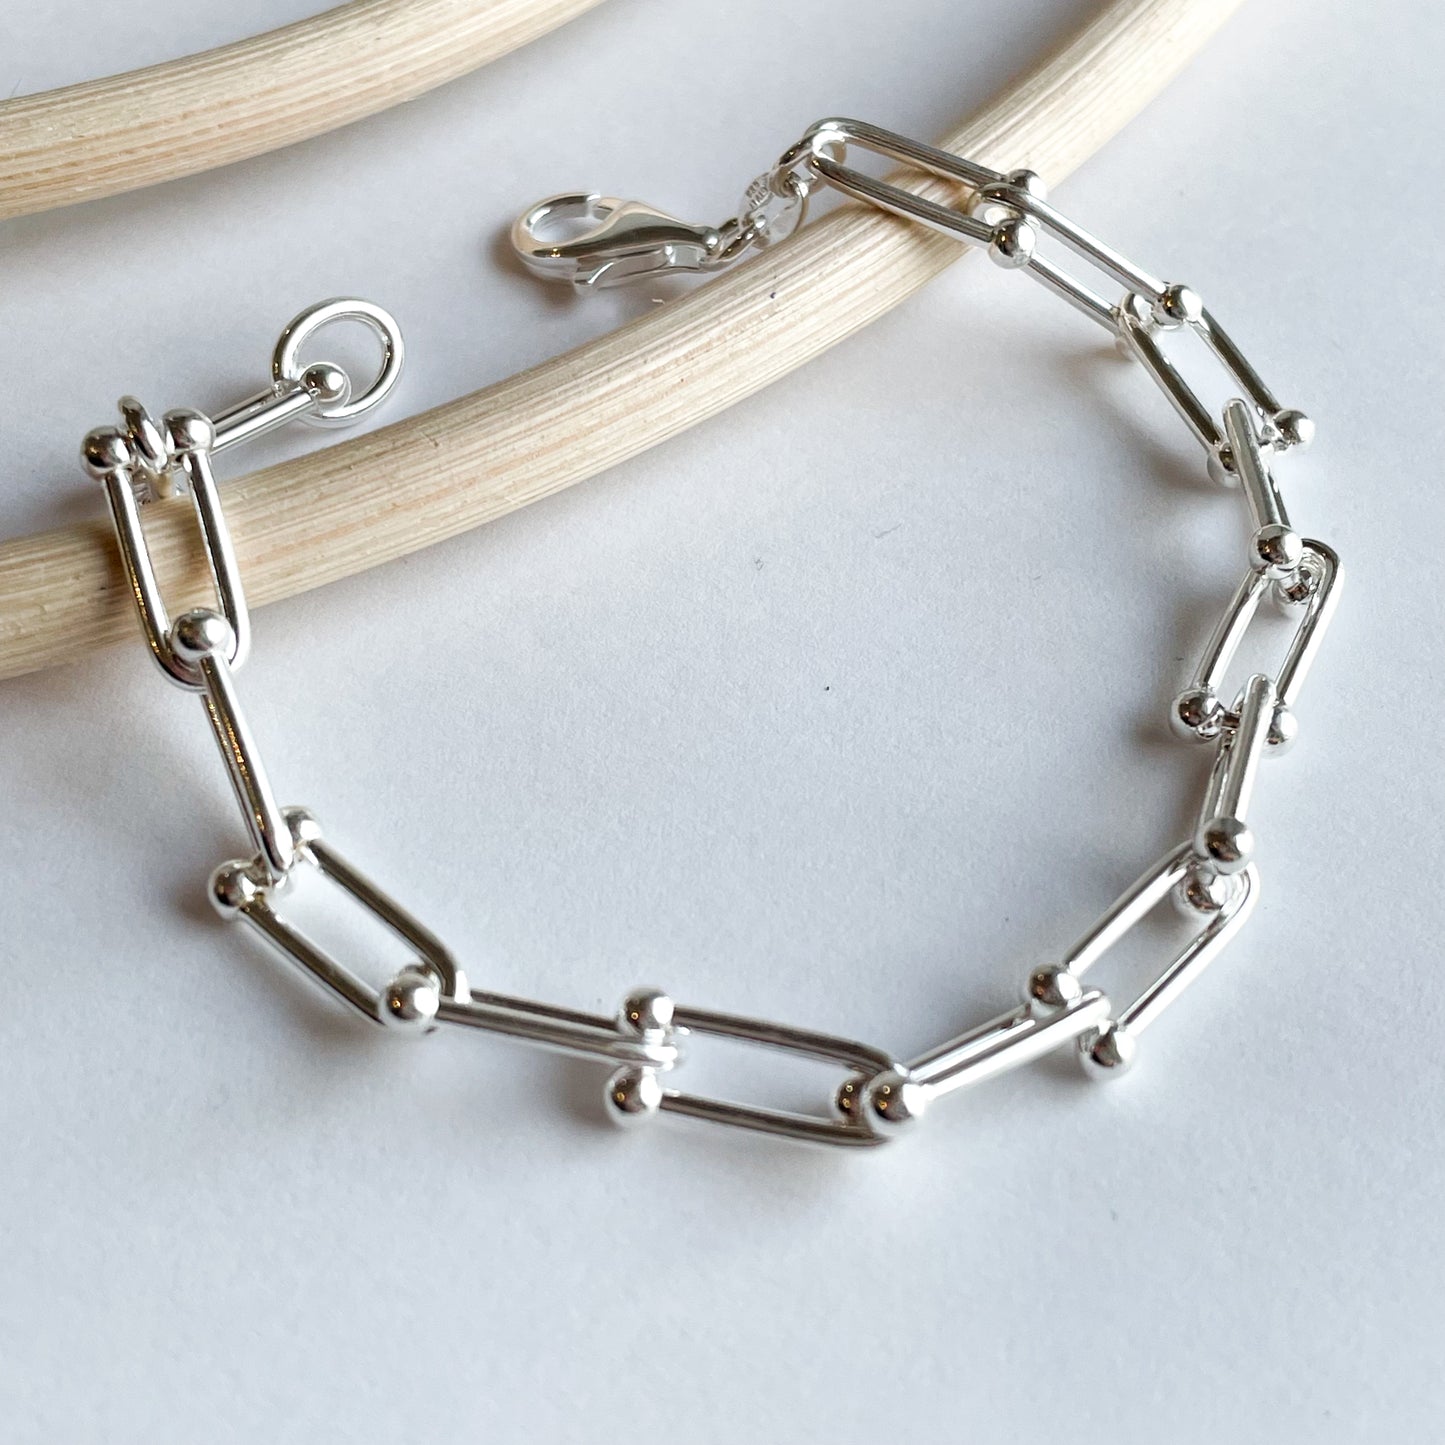 Horseshoe Chain Bracelet - Solid Sterling Silver